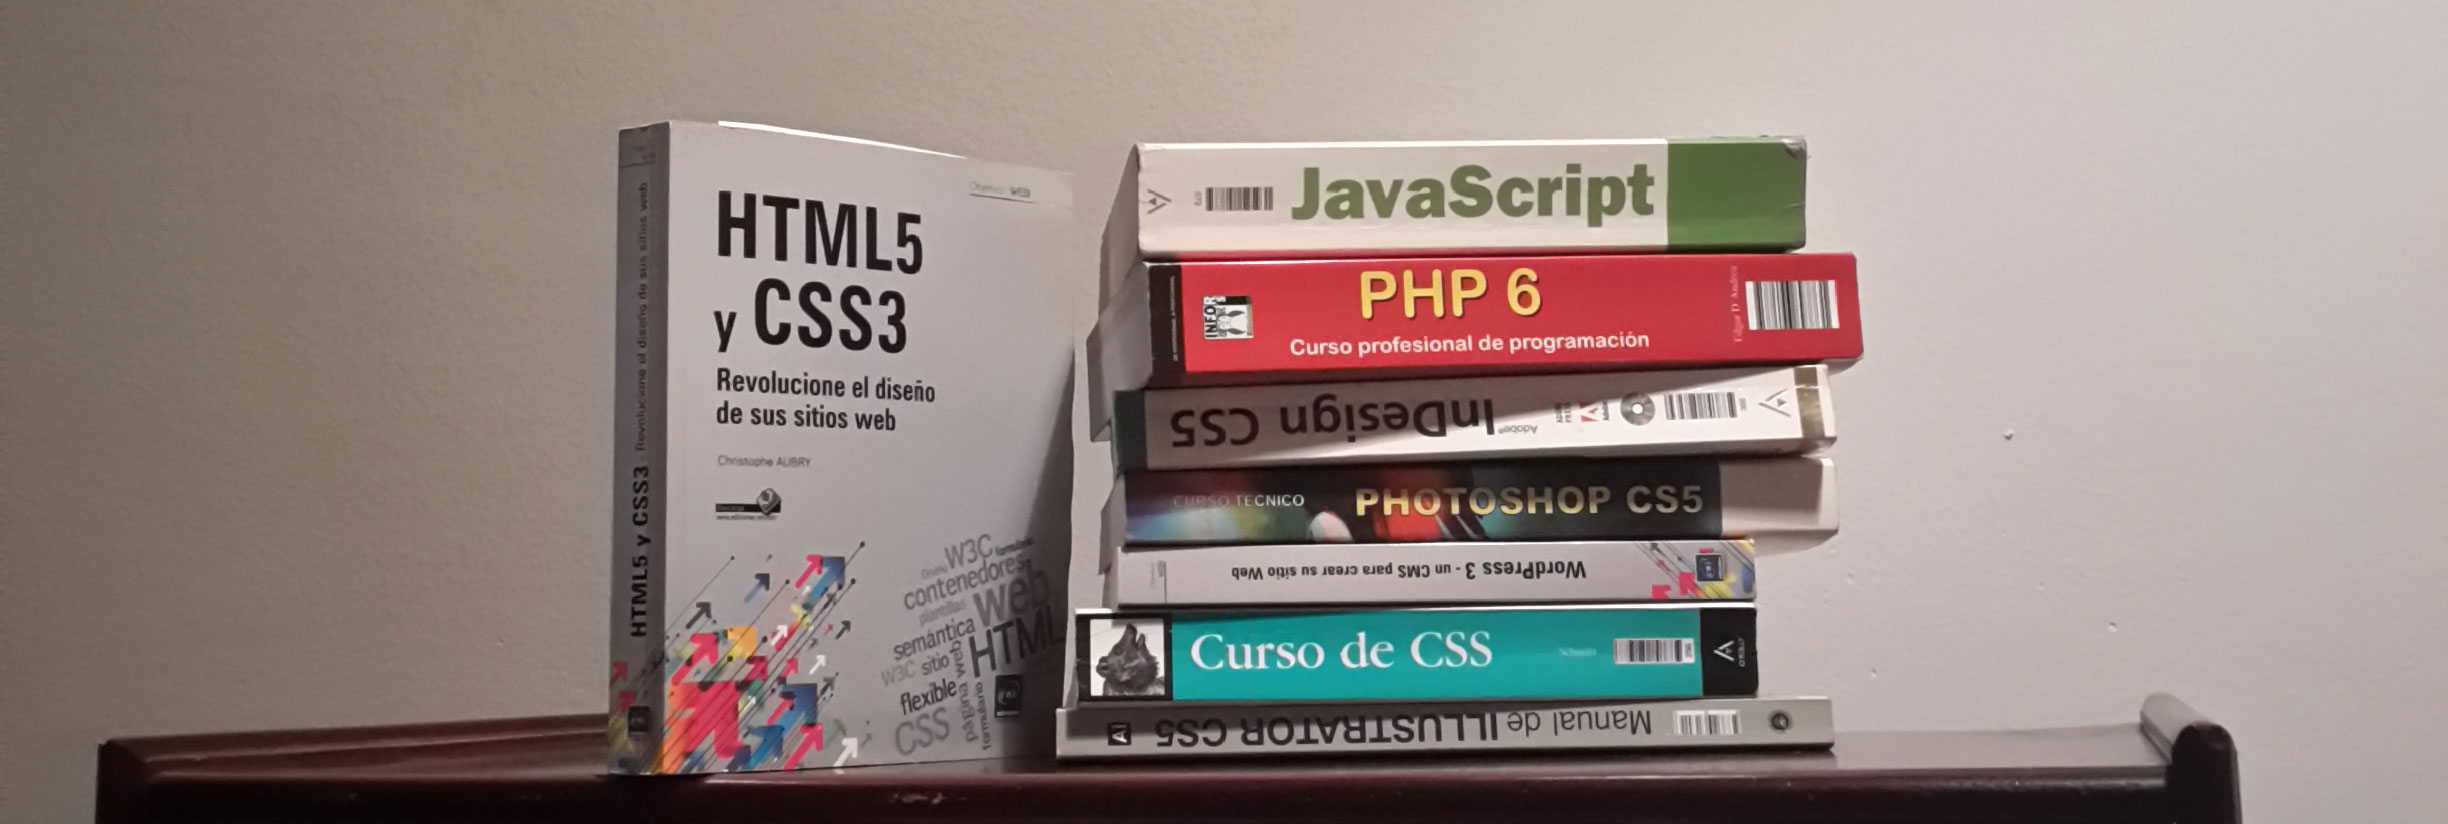 libros-de-estudios-html5-css3-javascript 